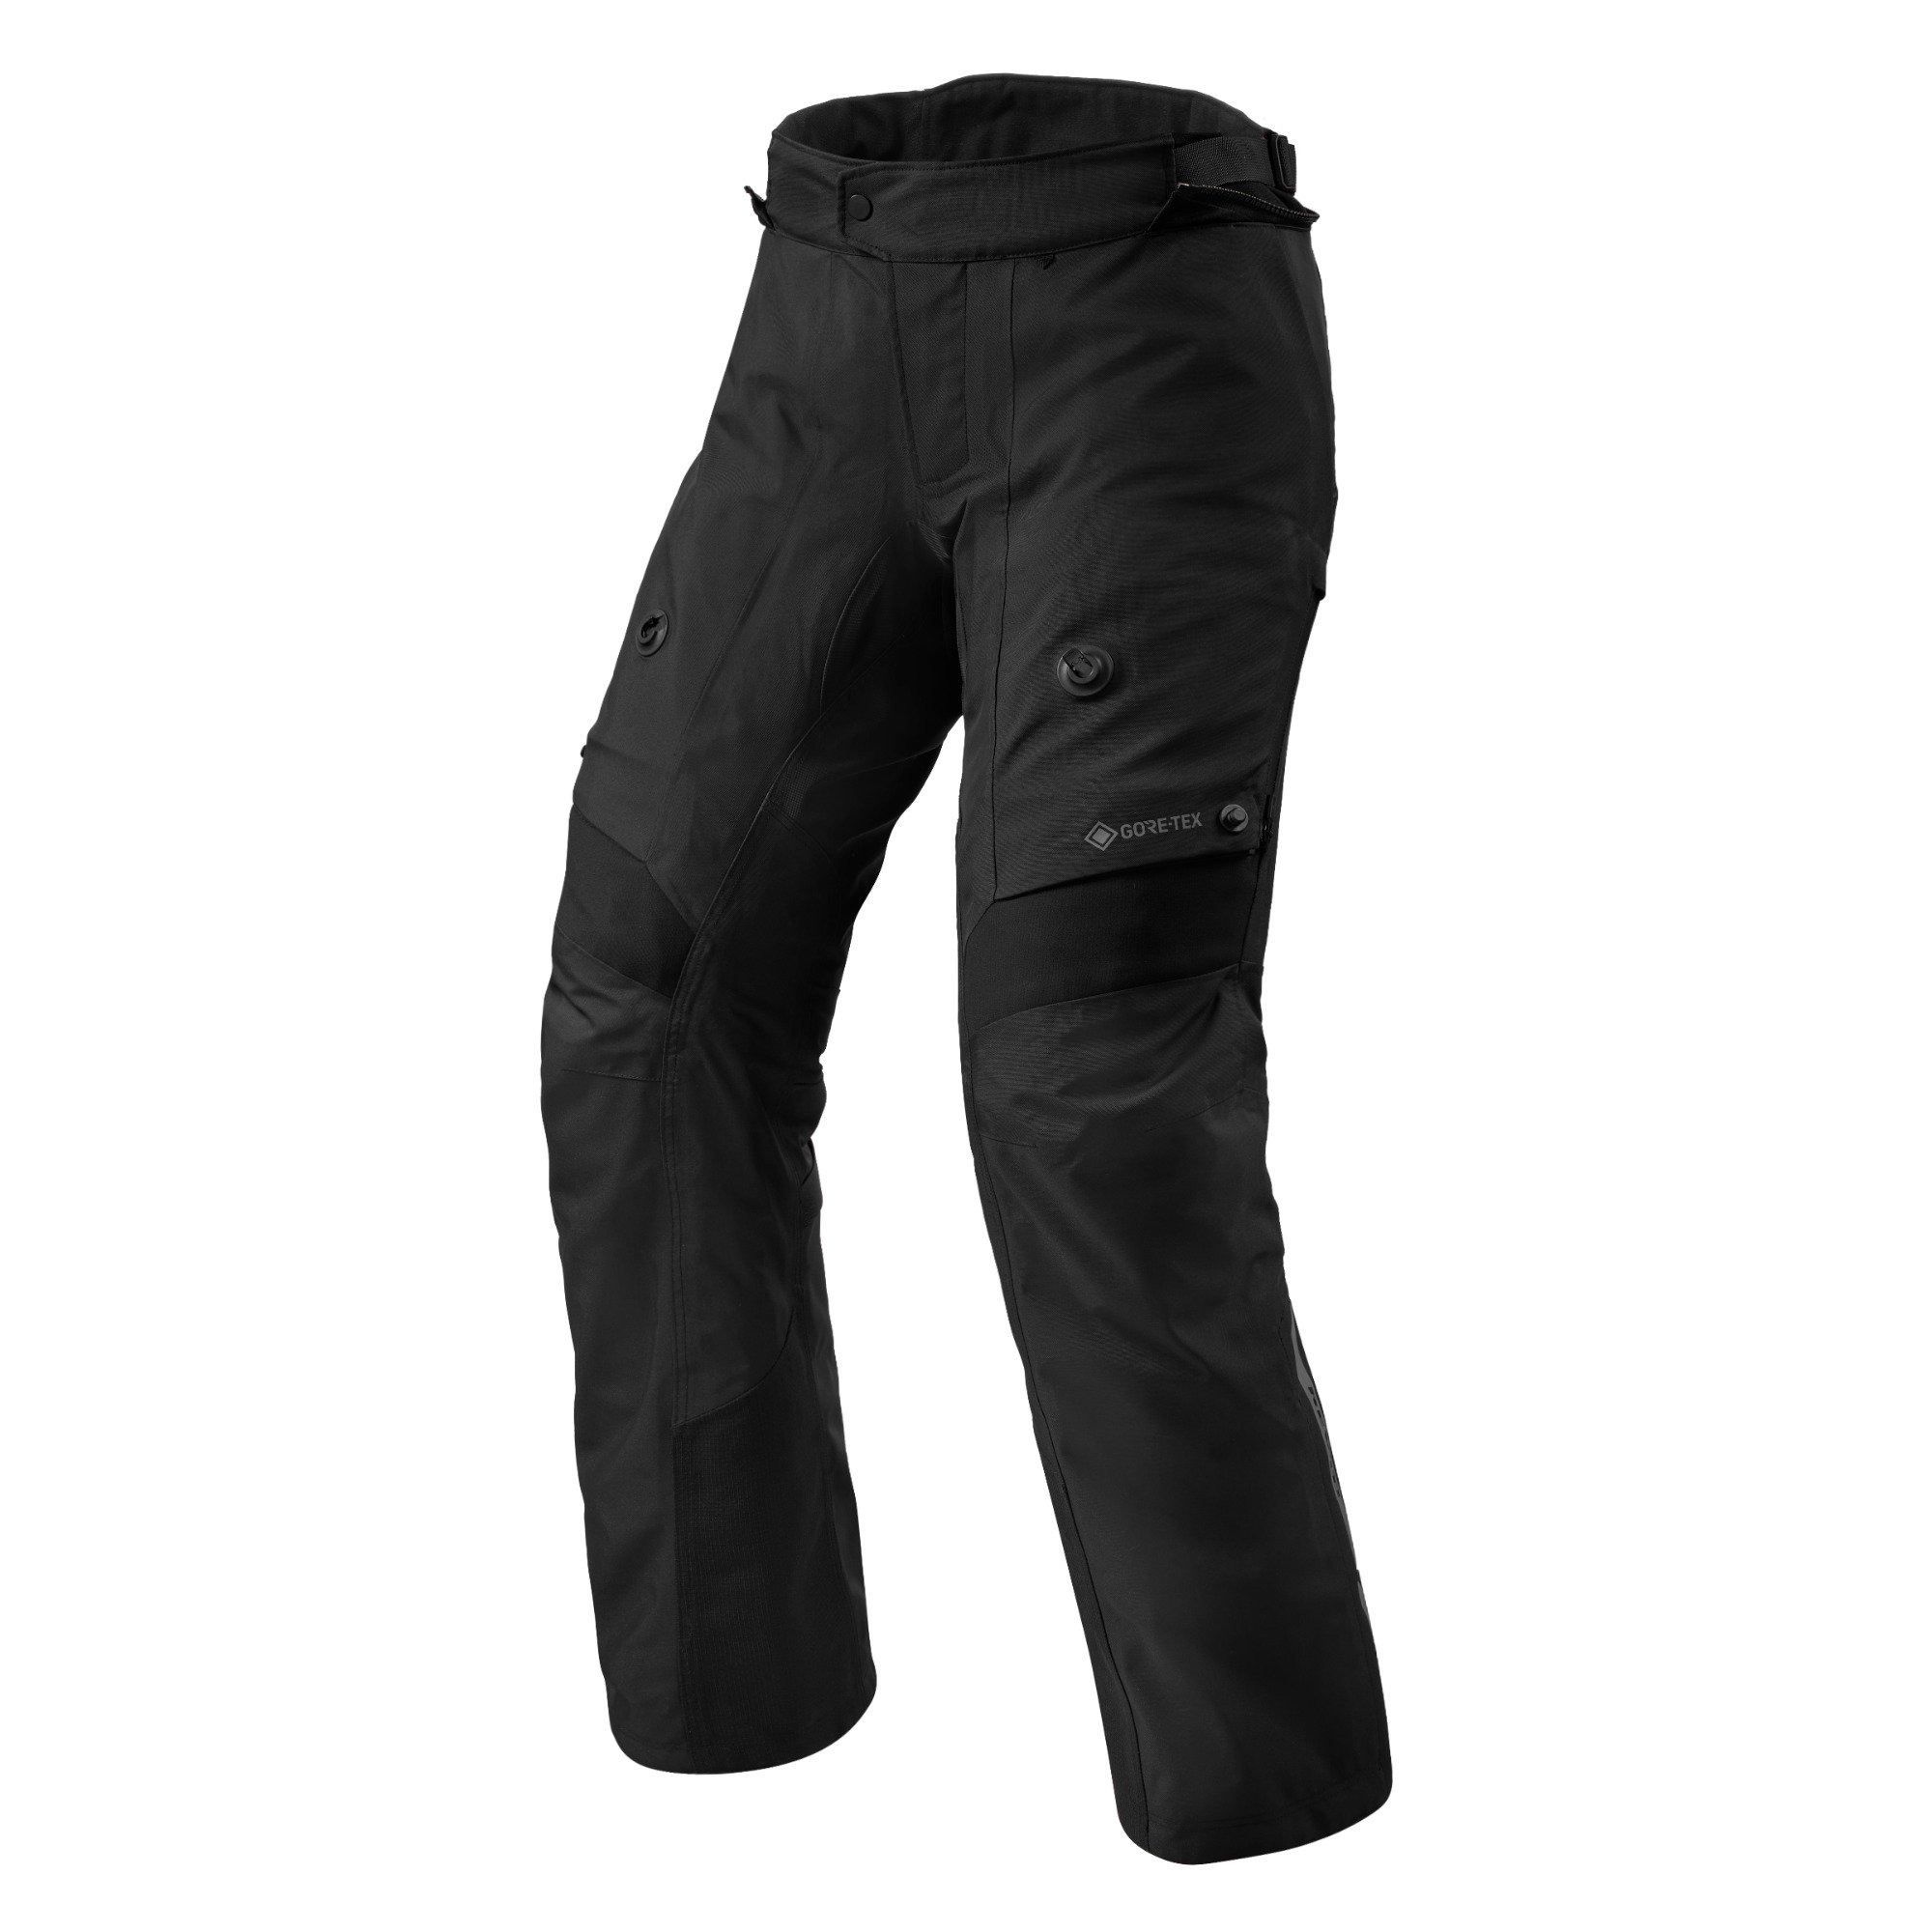 Image of REV'IT! Pants Poseidon 3 GTX Black Standard Motorcycle Pants Size XL EN